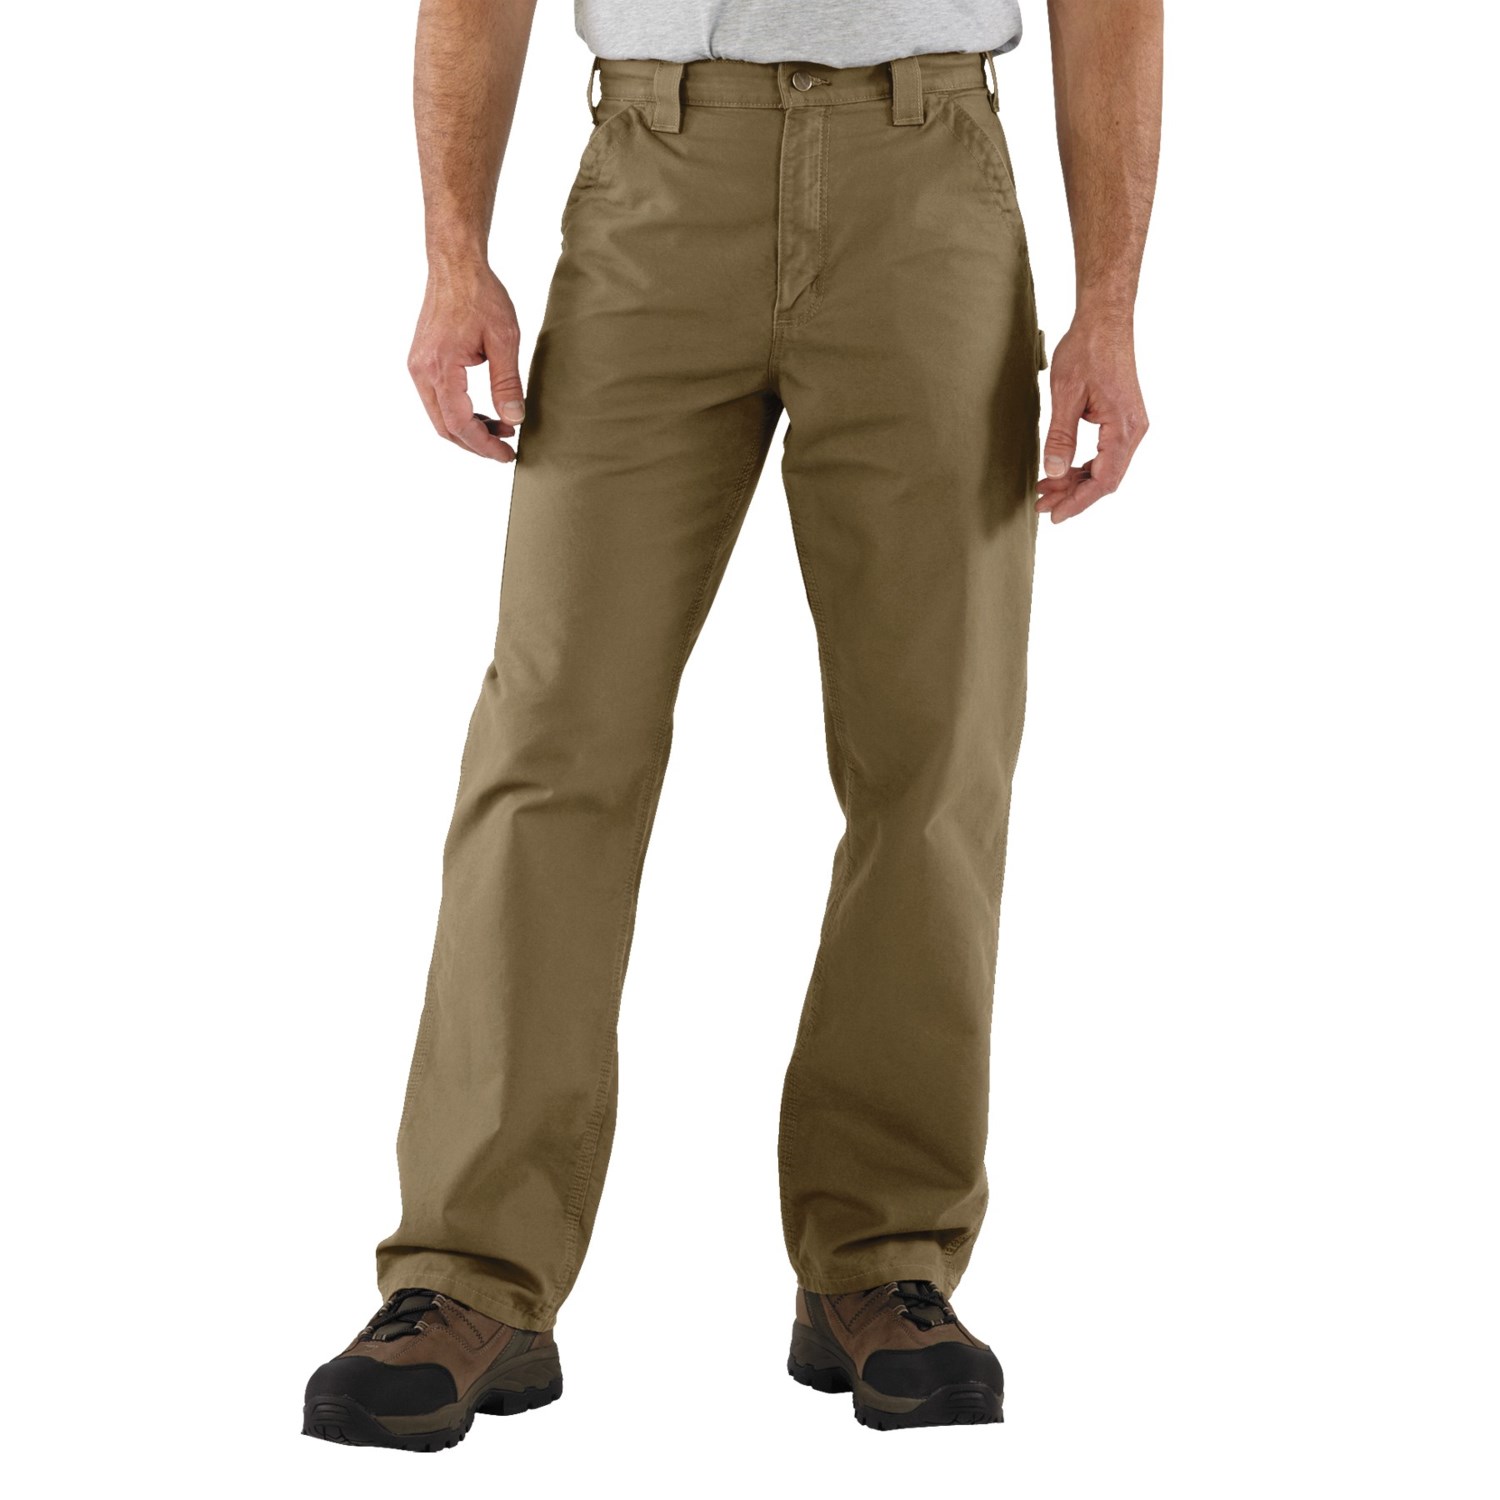 Carhartt Rugged Work Khaki Pants (For Men)